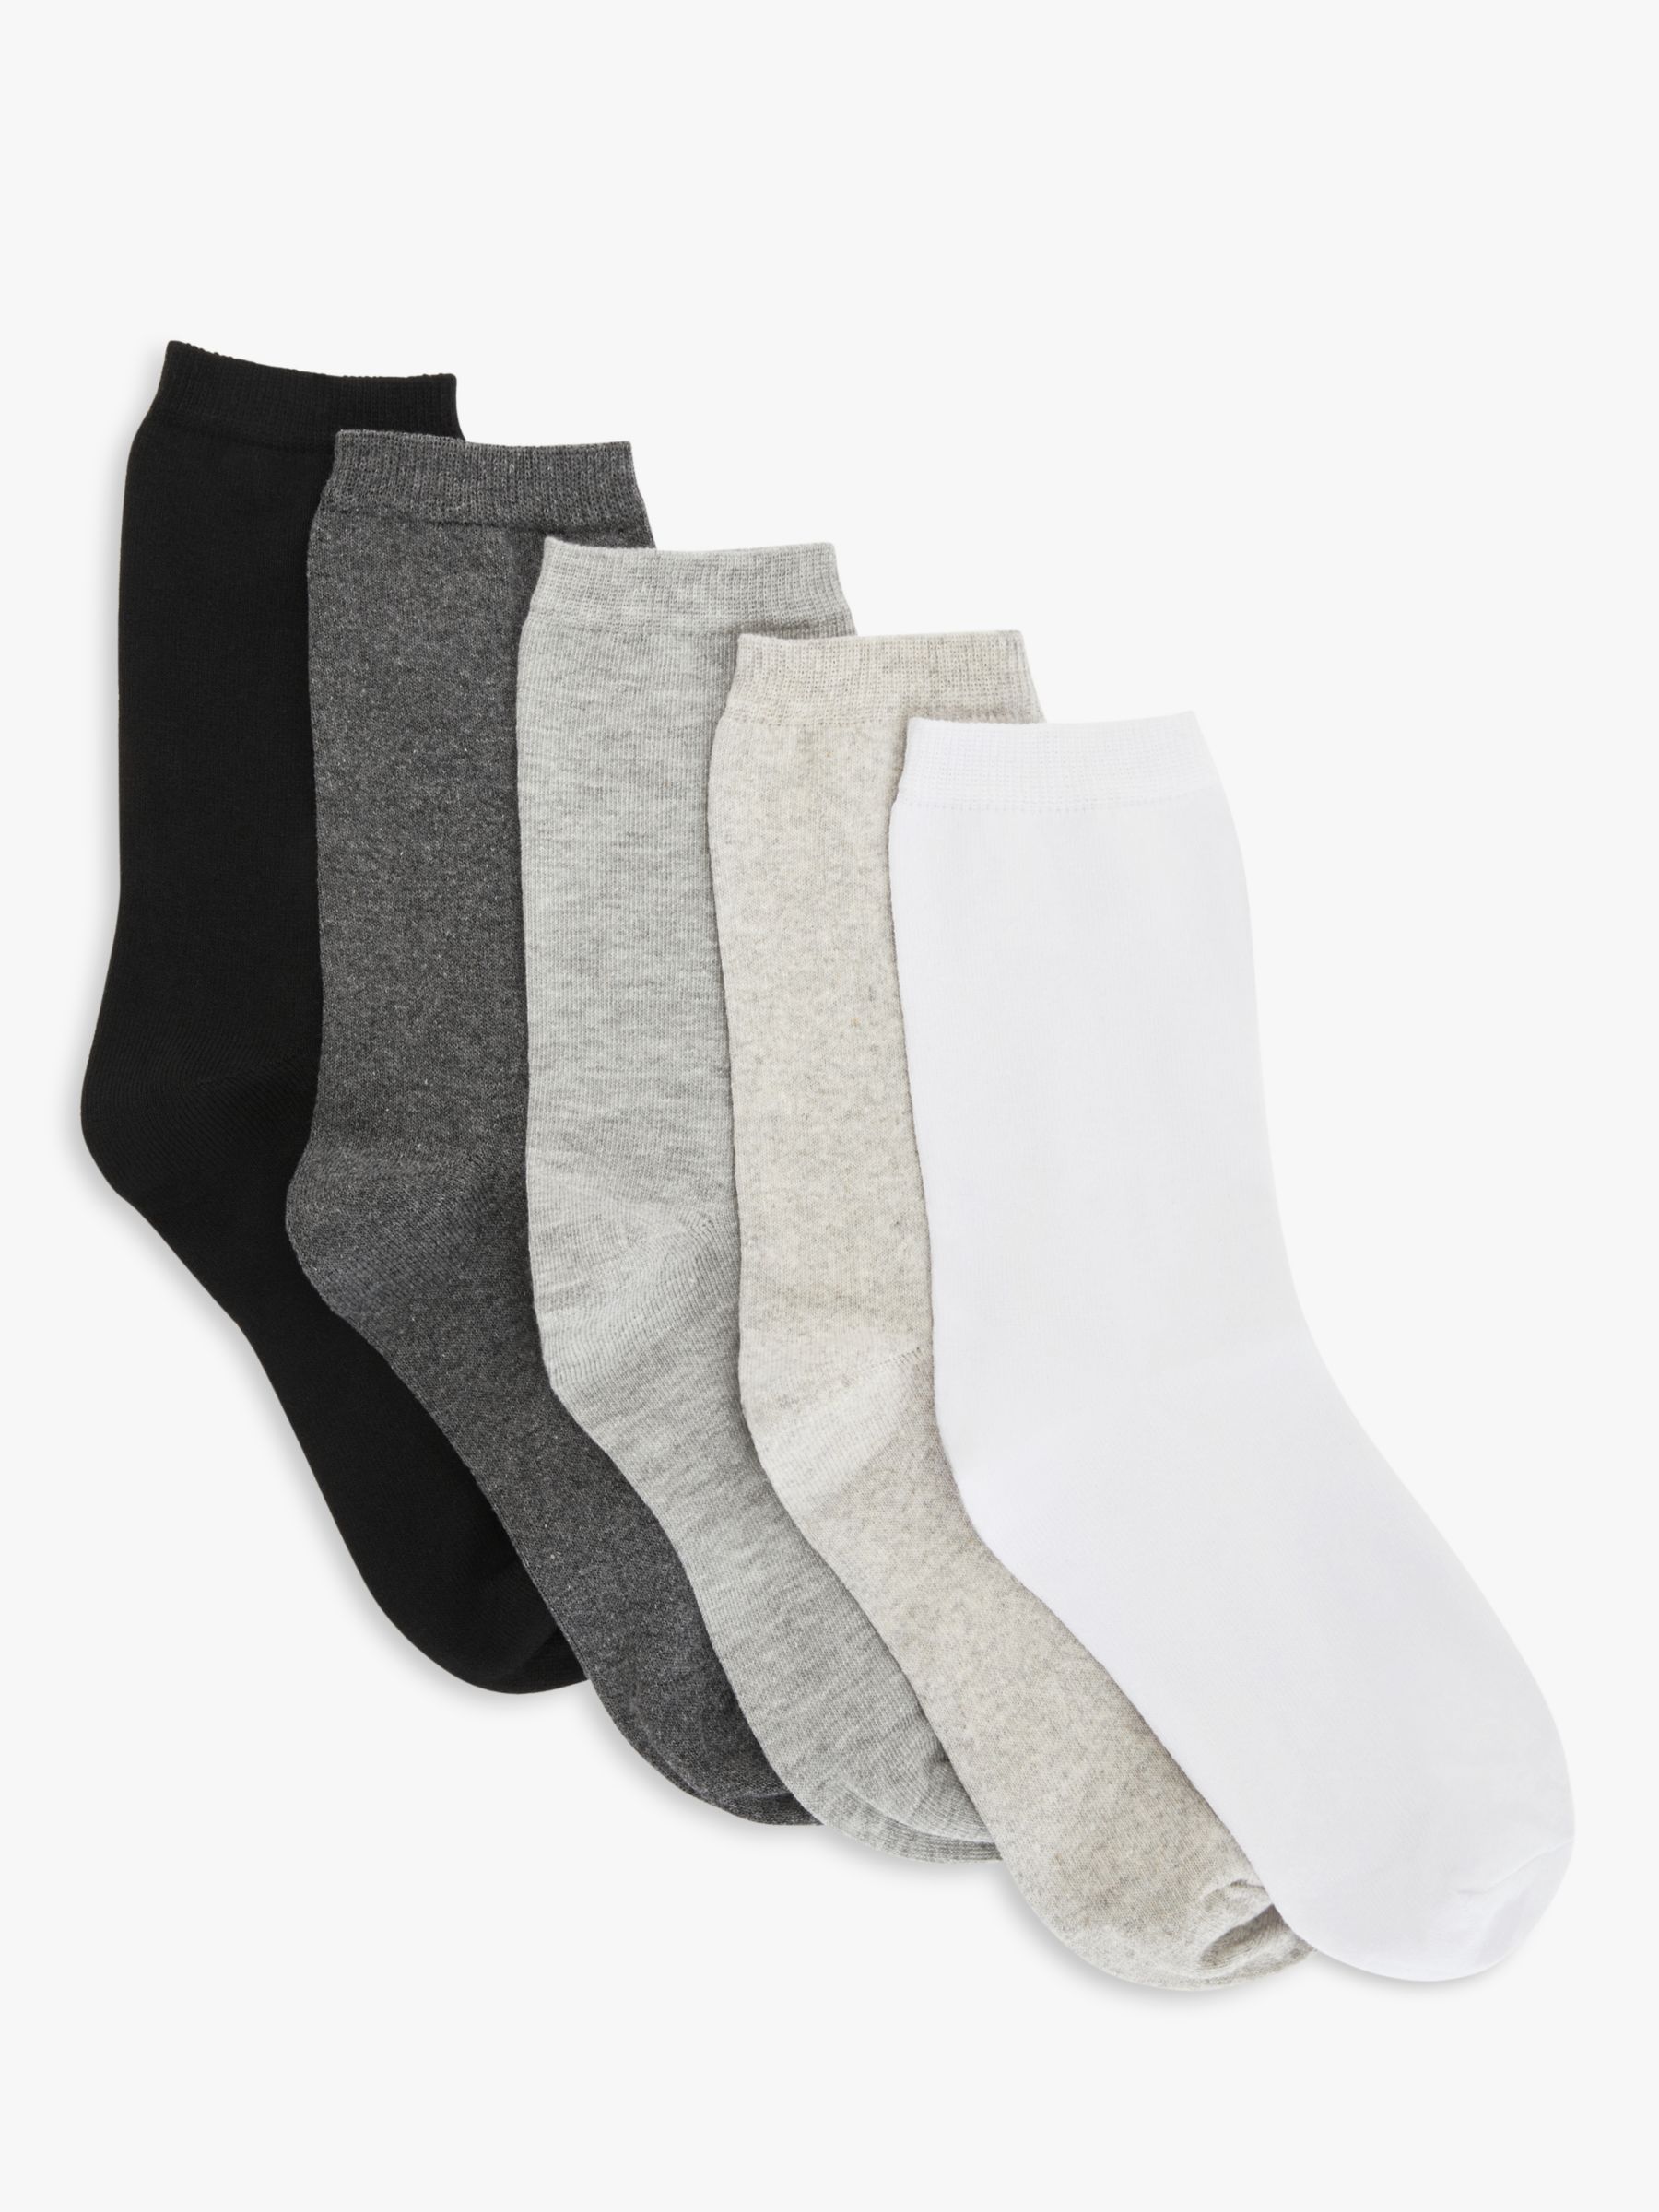 John Lewis Ankle Socks, Pack of 5, Multi at John Lewis & Partners